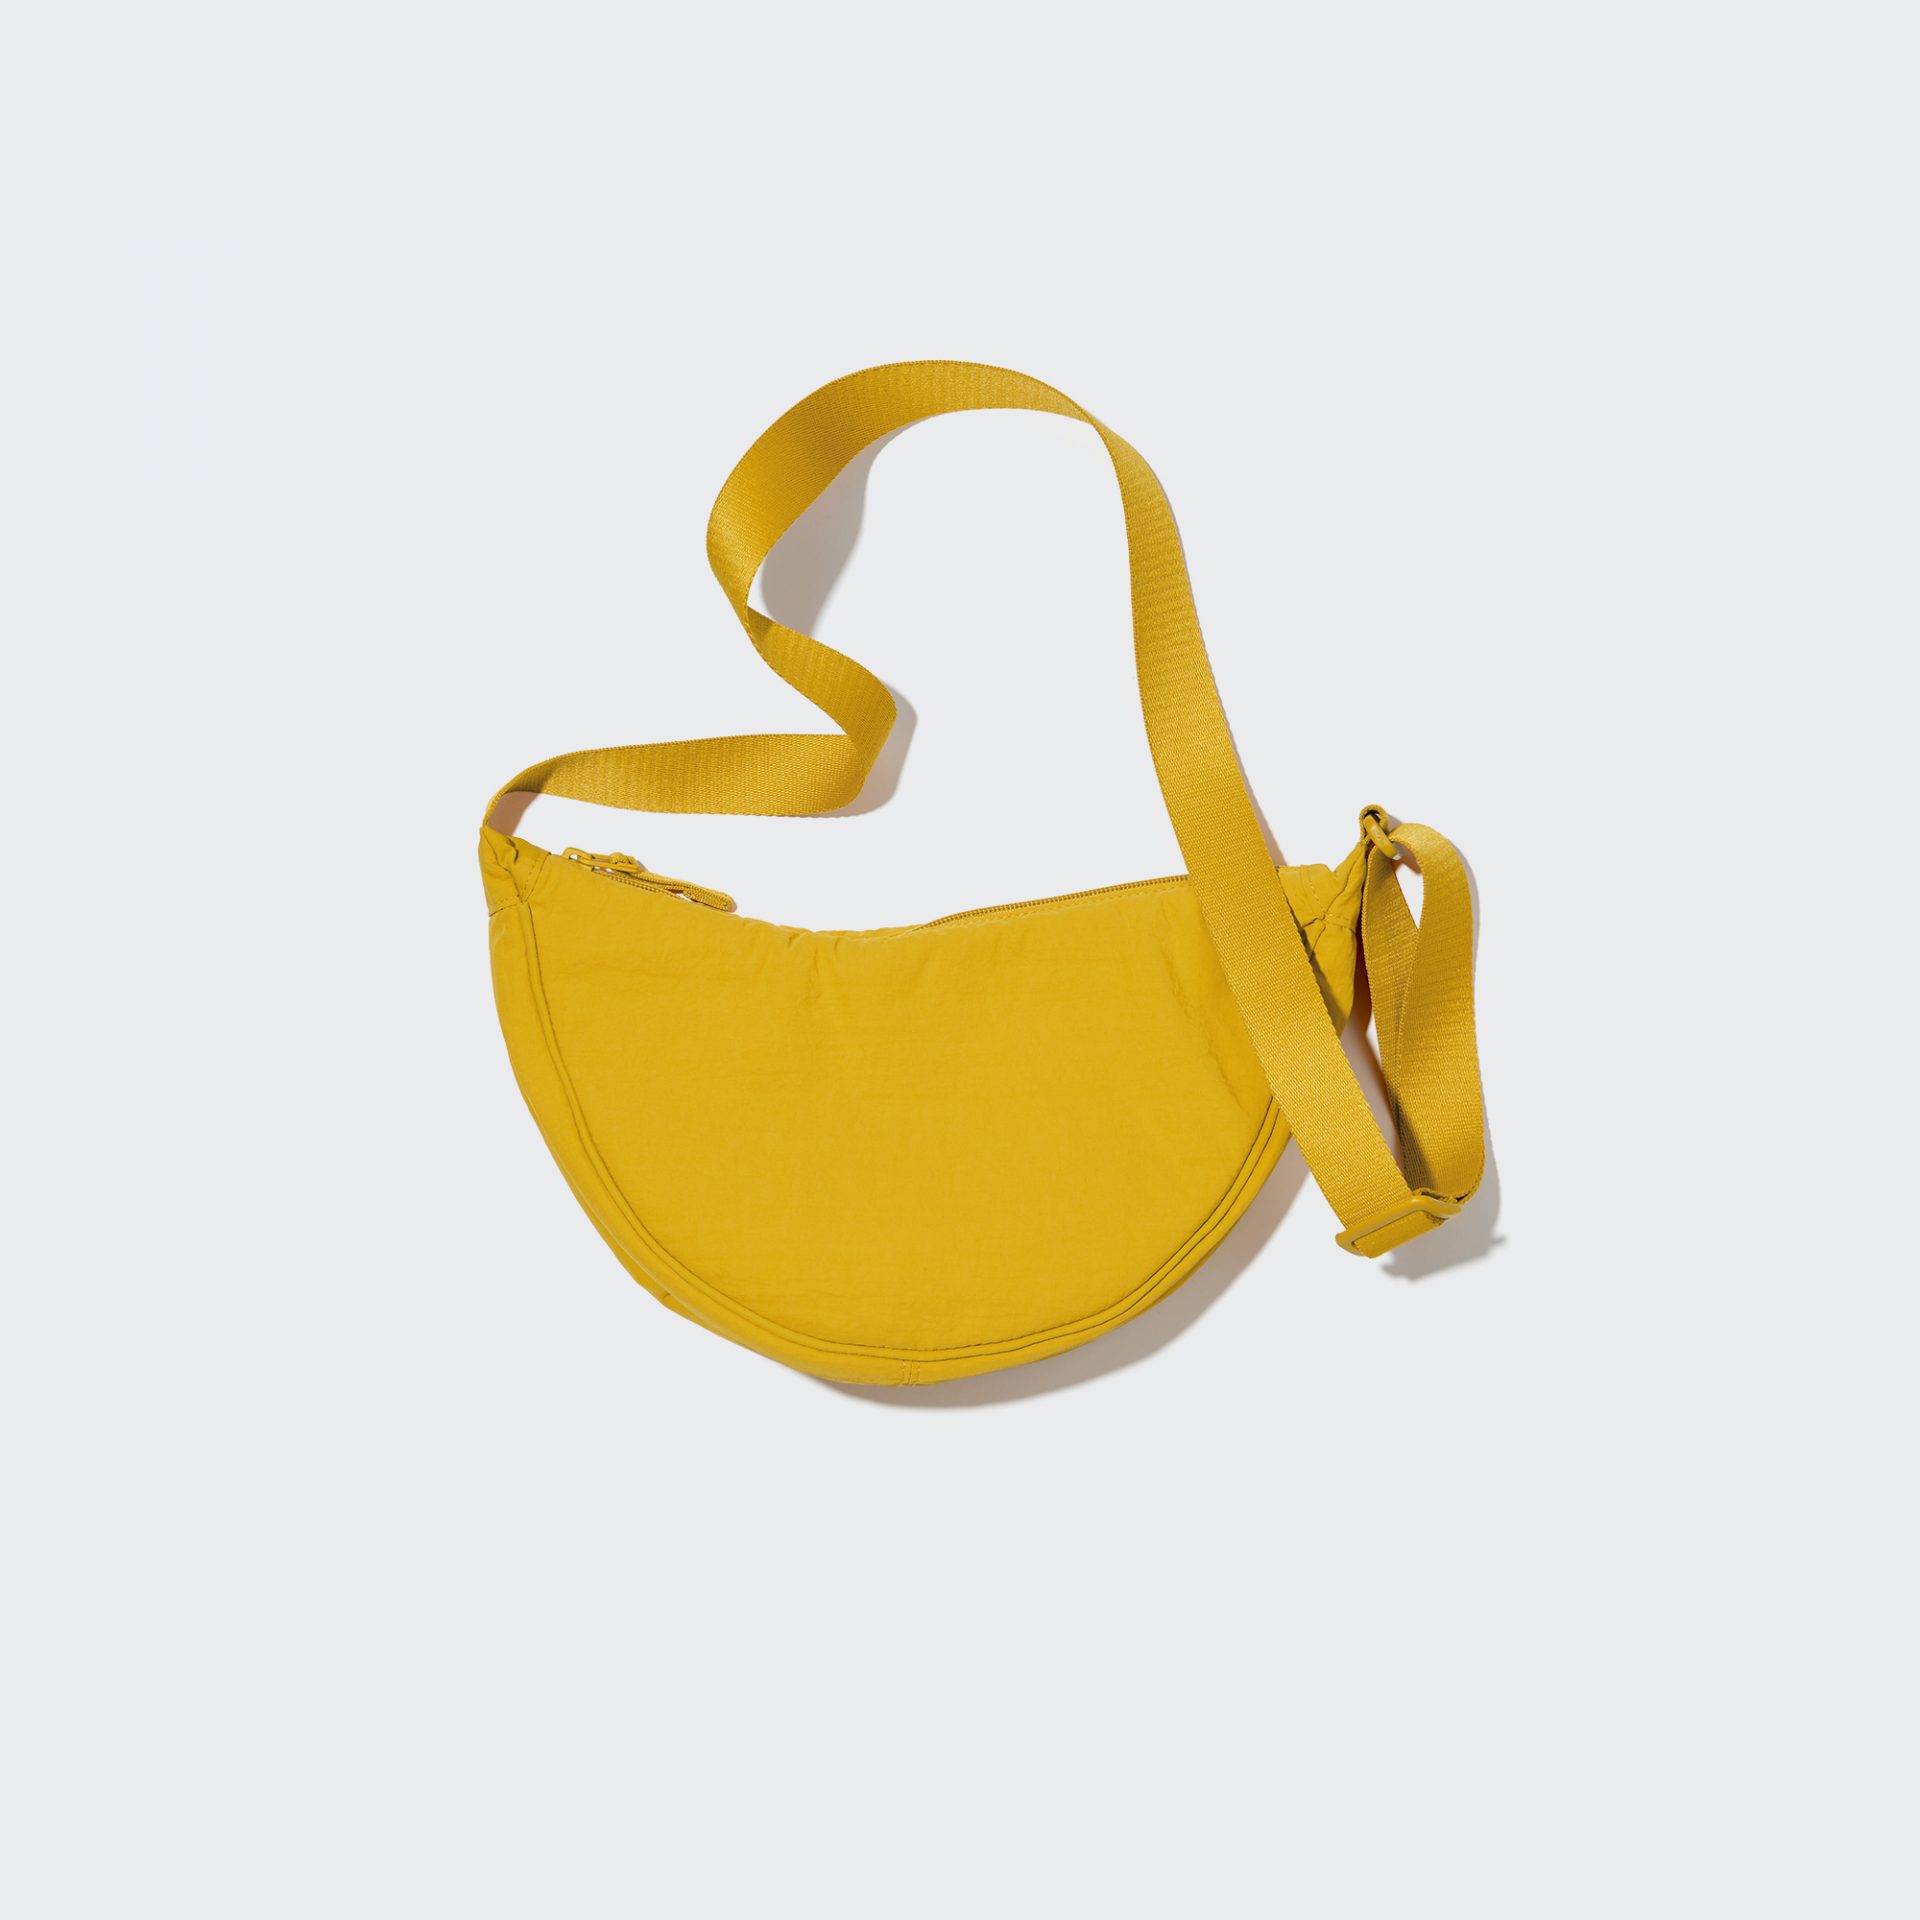 The Row Banana Bag Dupe by Uniqlo - Uniqlo Round Nylon Shoulder Bag 